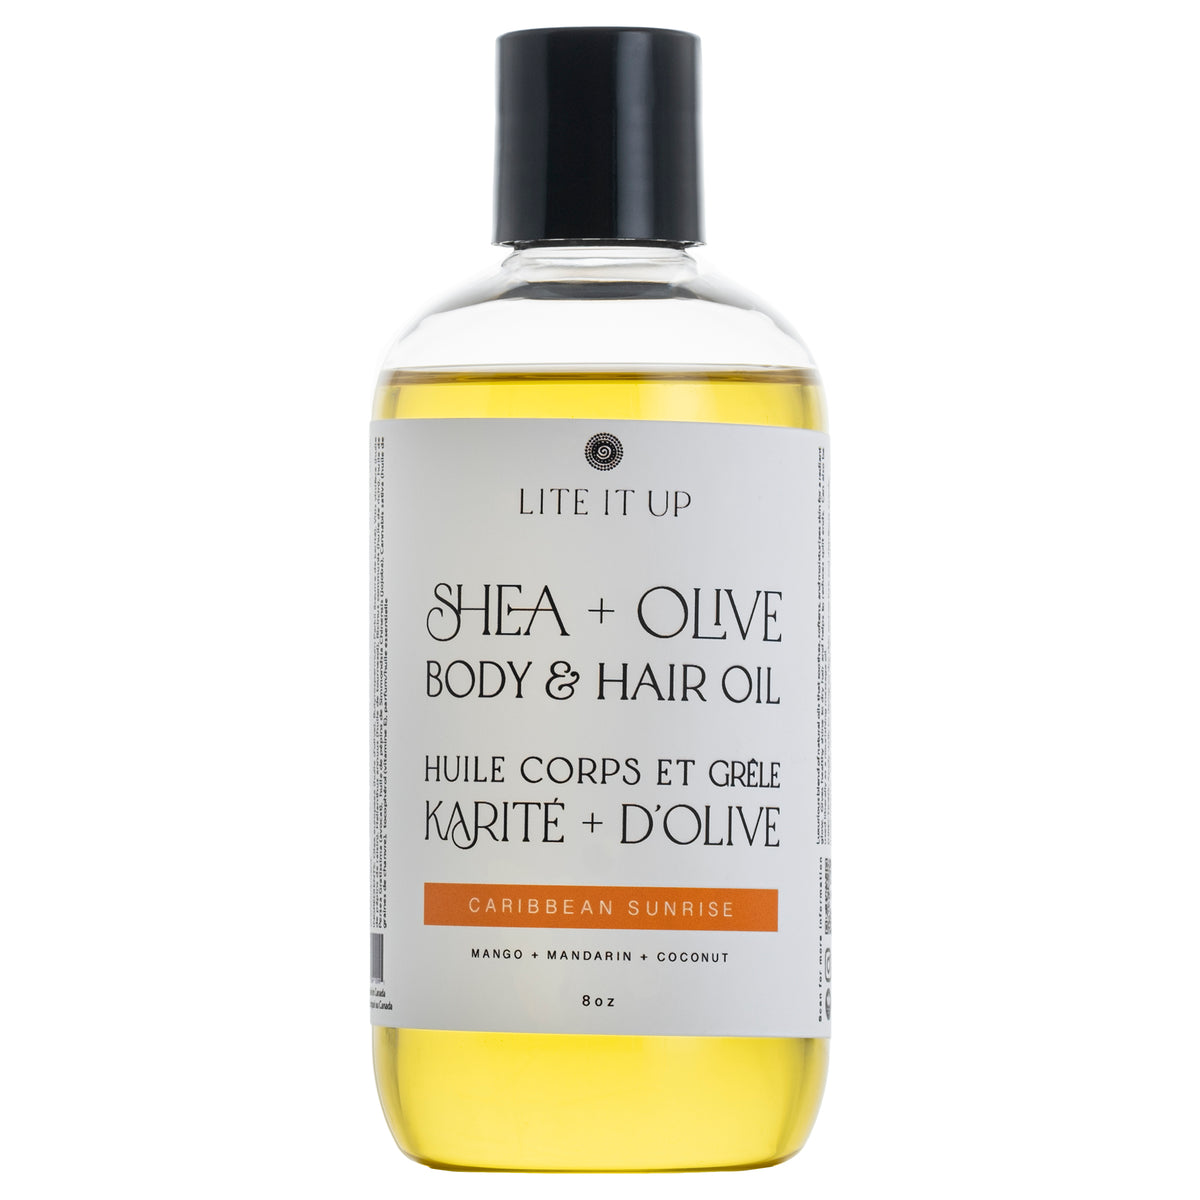 Shea & Olive Body and Hair Oil - CARIBBEAN SUNRISE